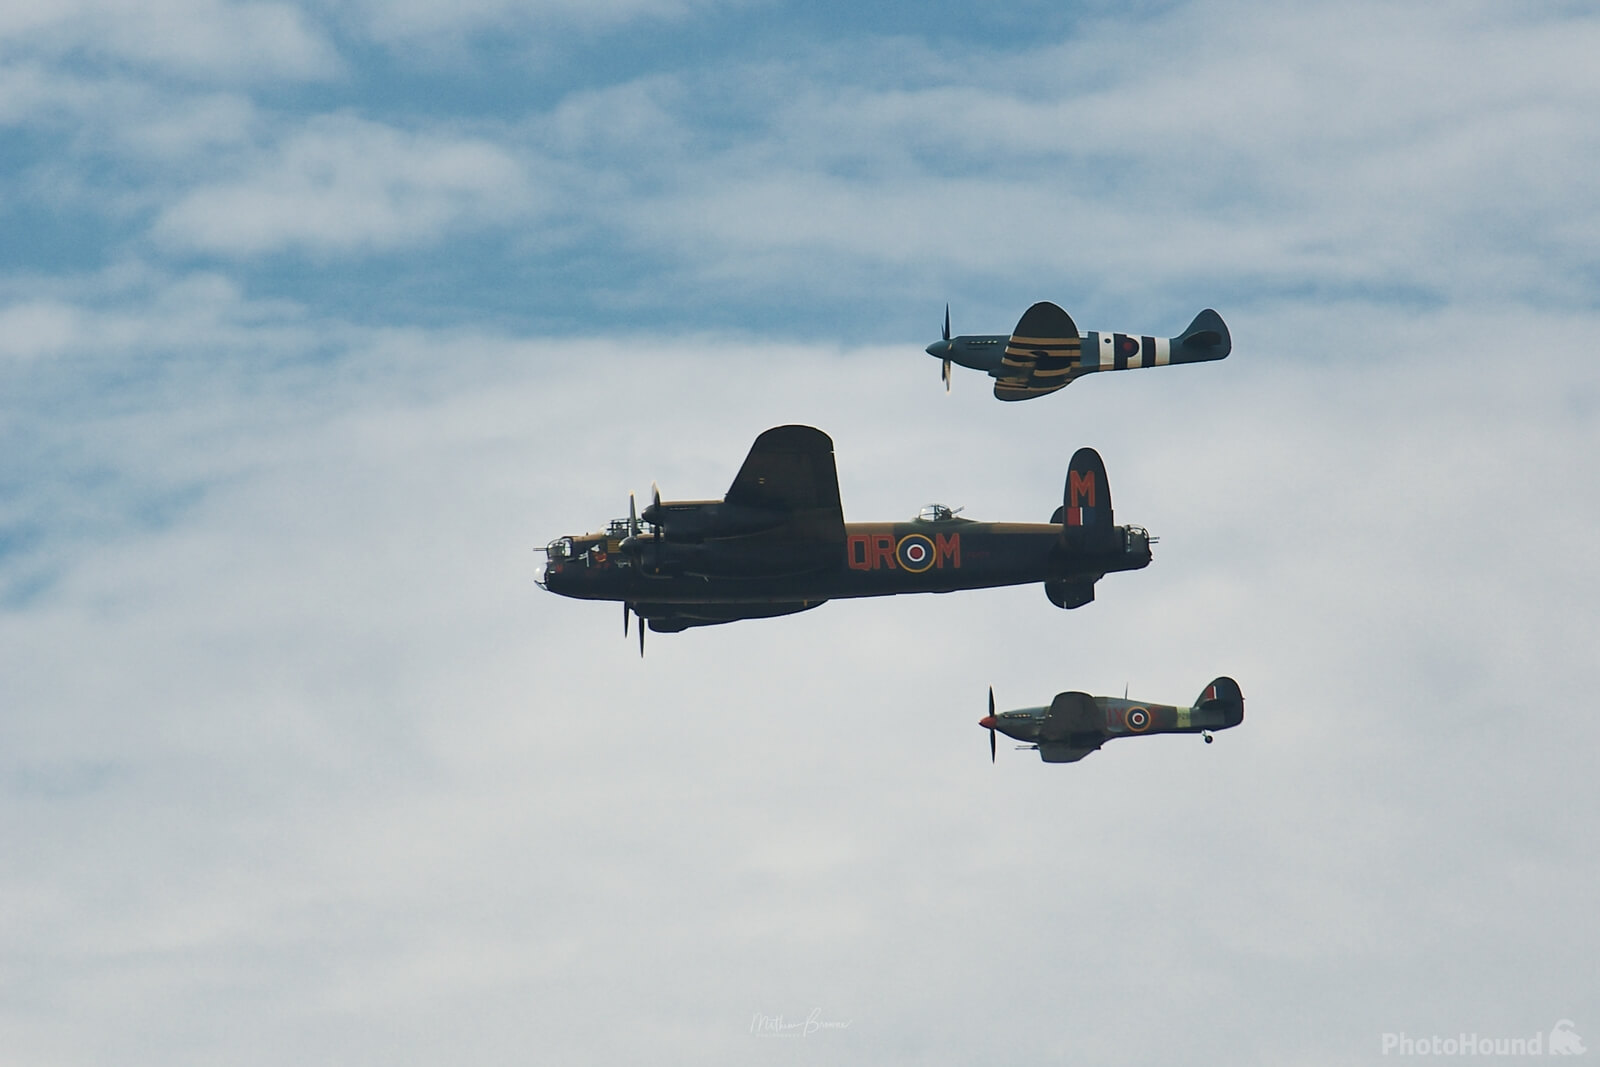 Image of Farnborough Airshow by Mathew Browne